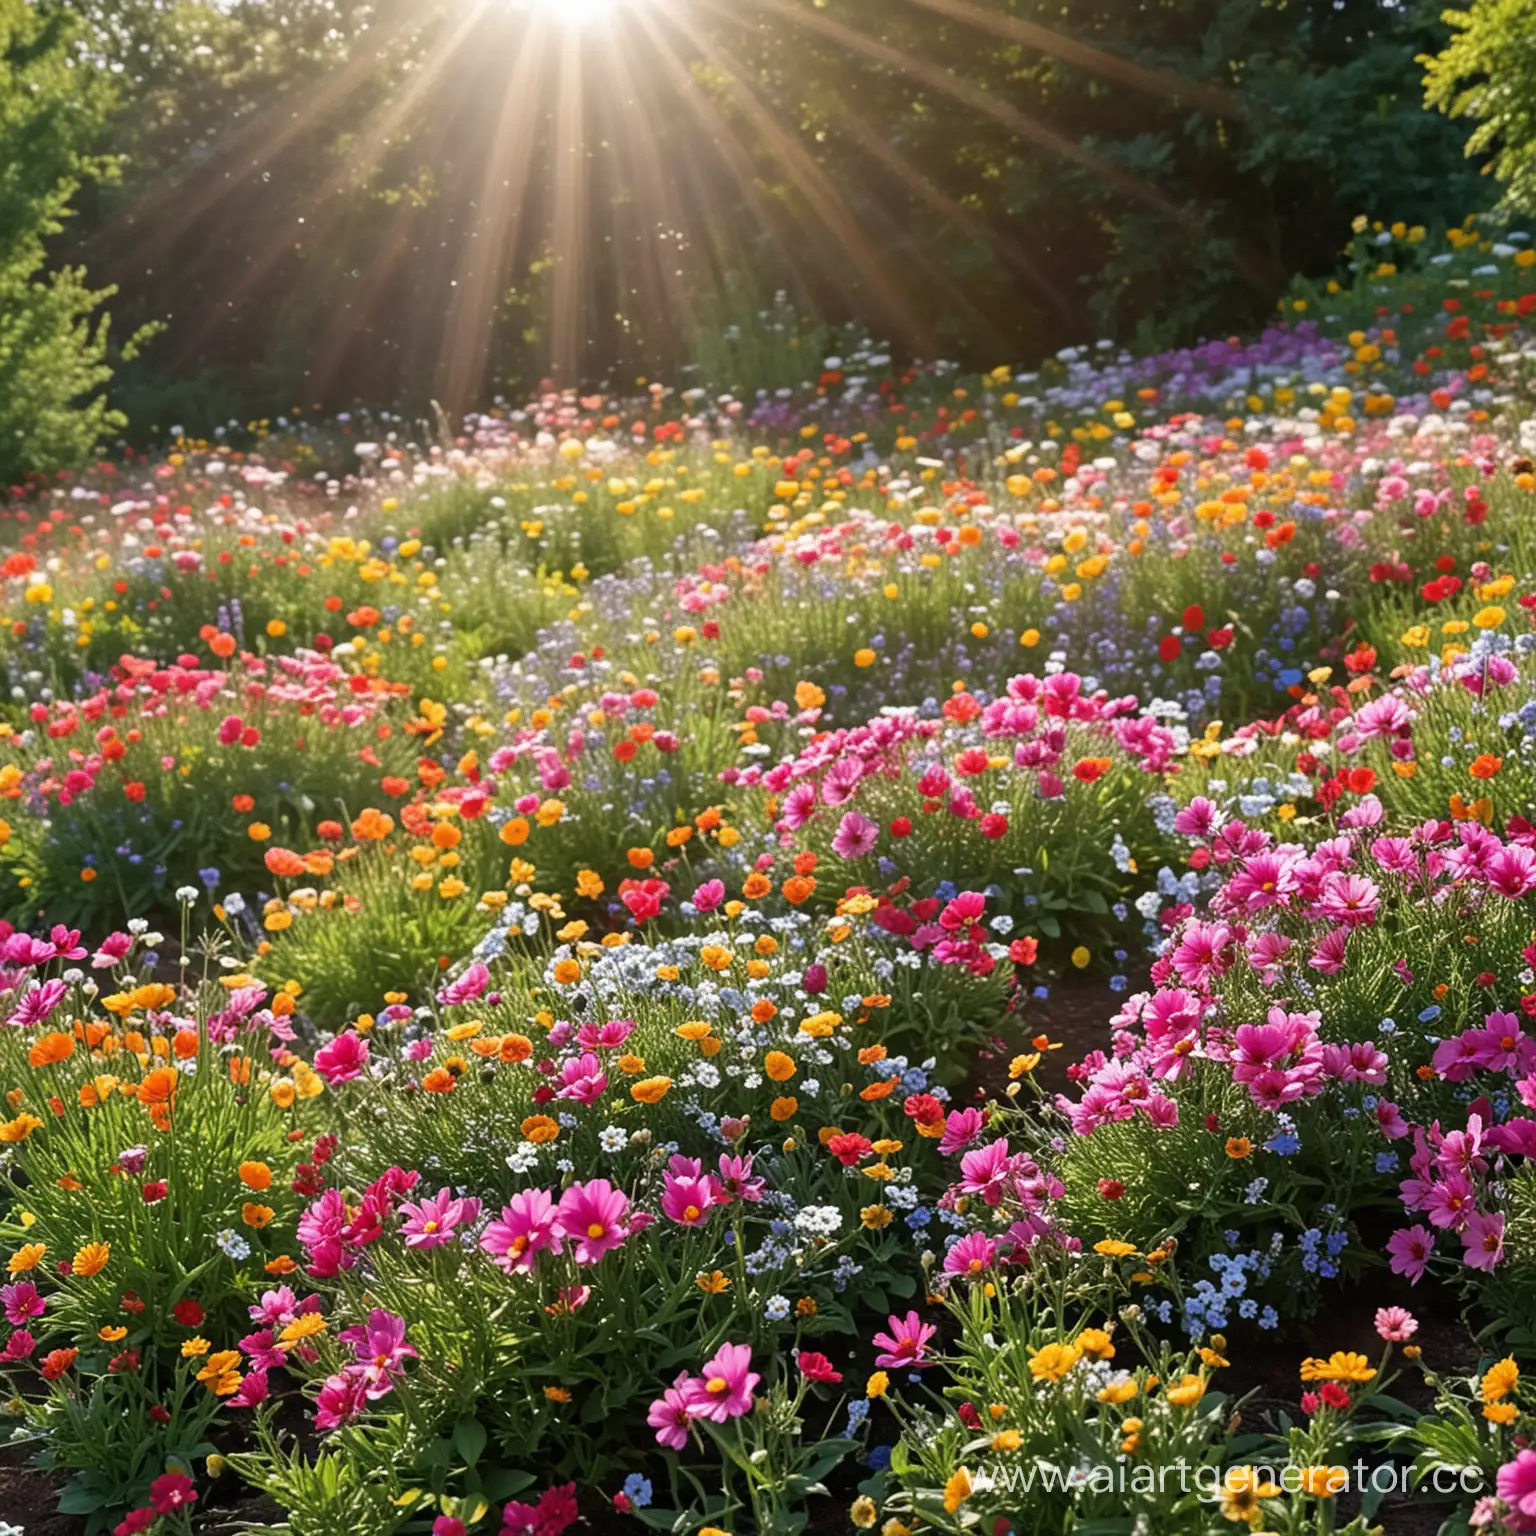 Vibrant-Sunlit-Garden-with-Diverse-Floral-Patches